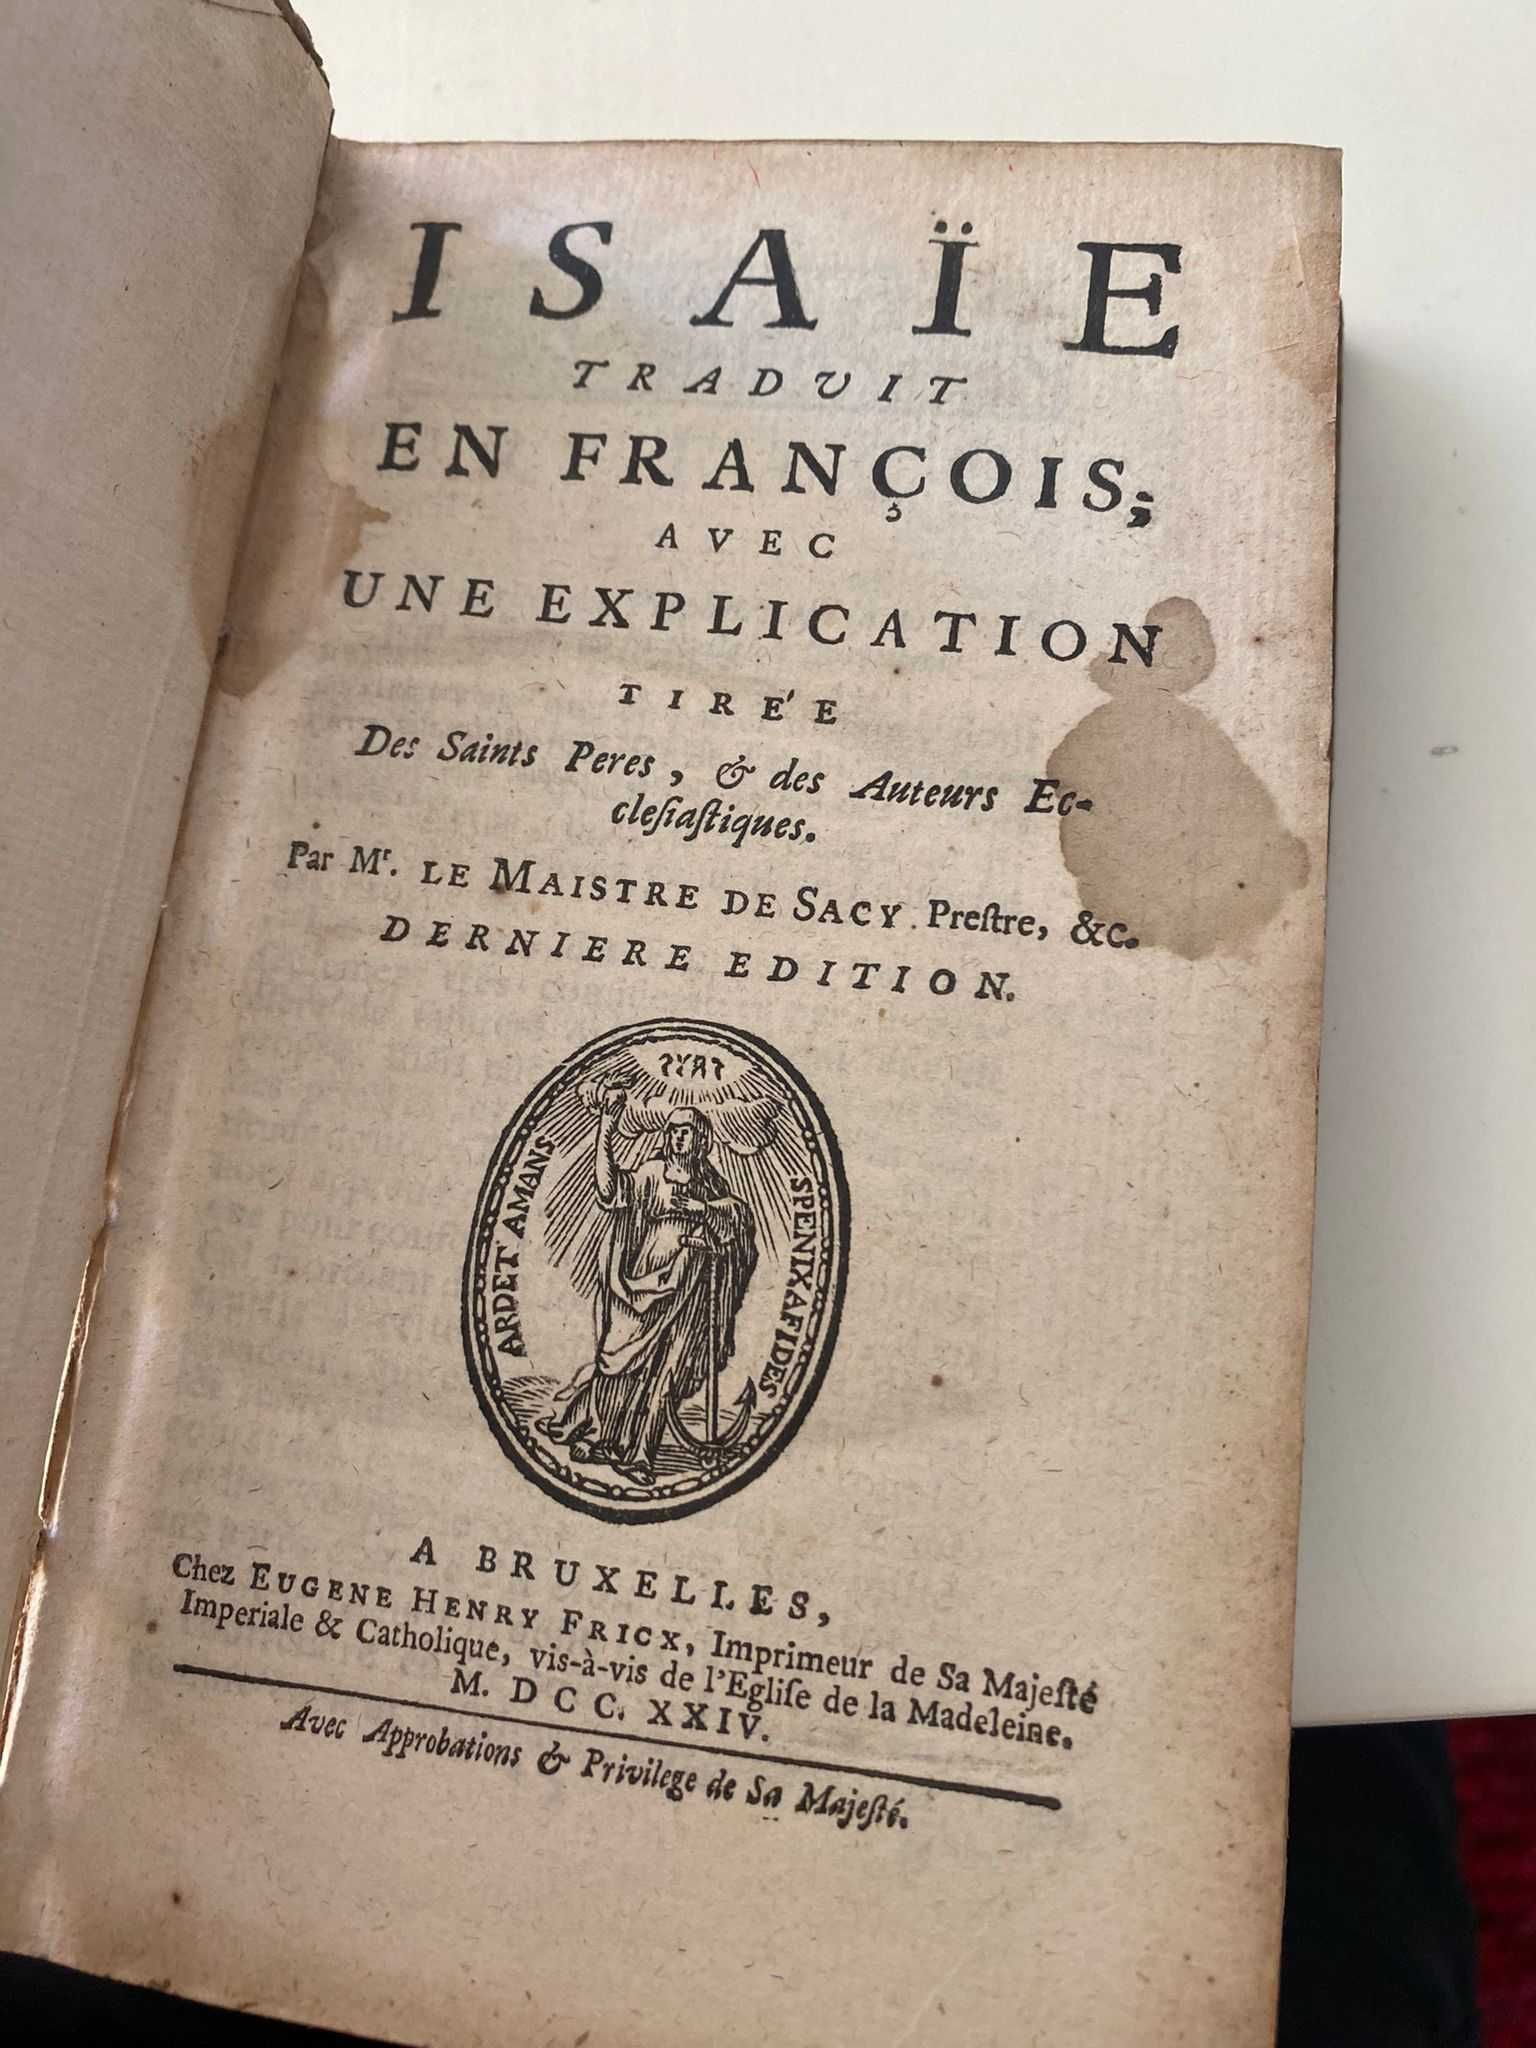 Isaïe traduit en françois 1724